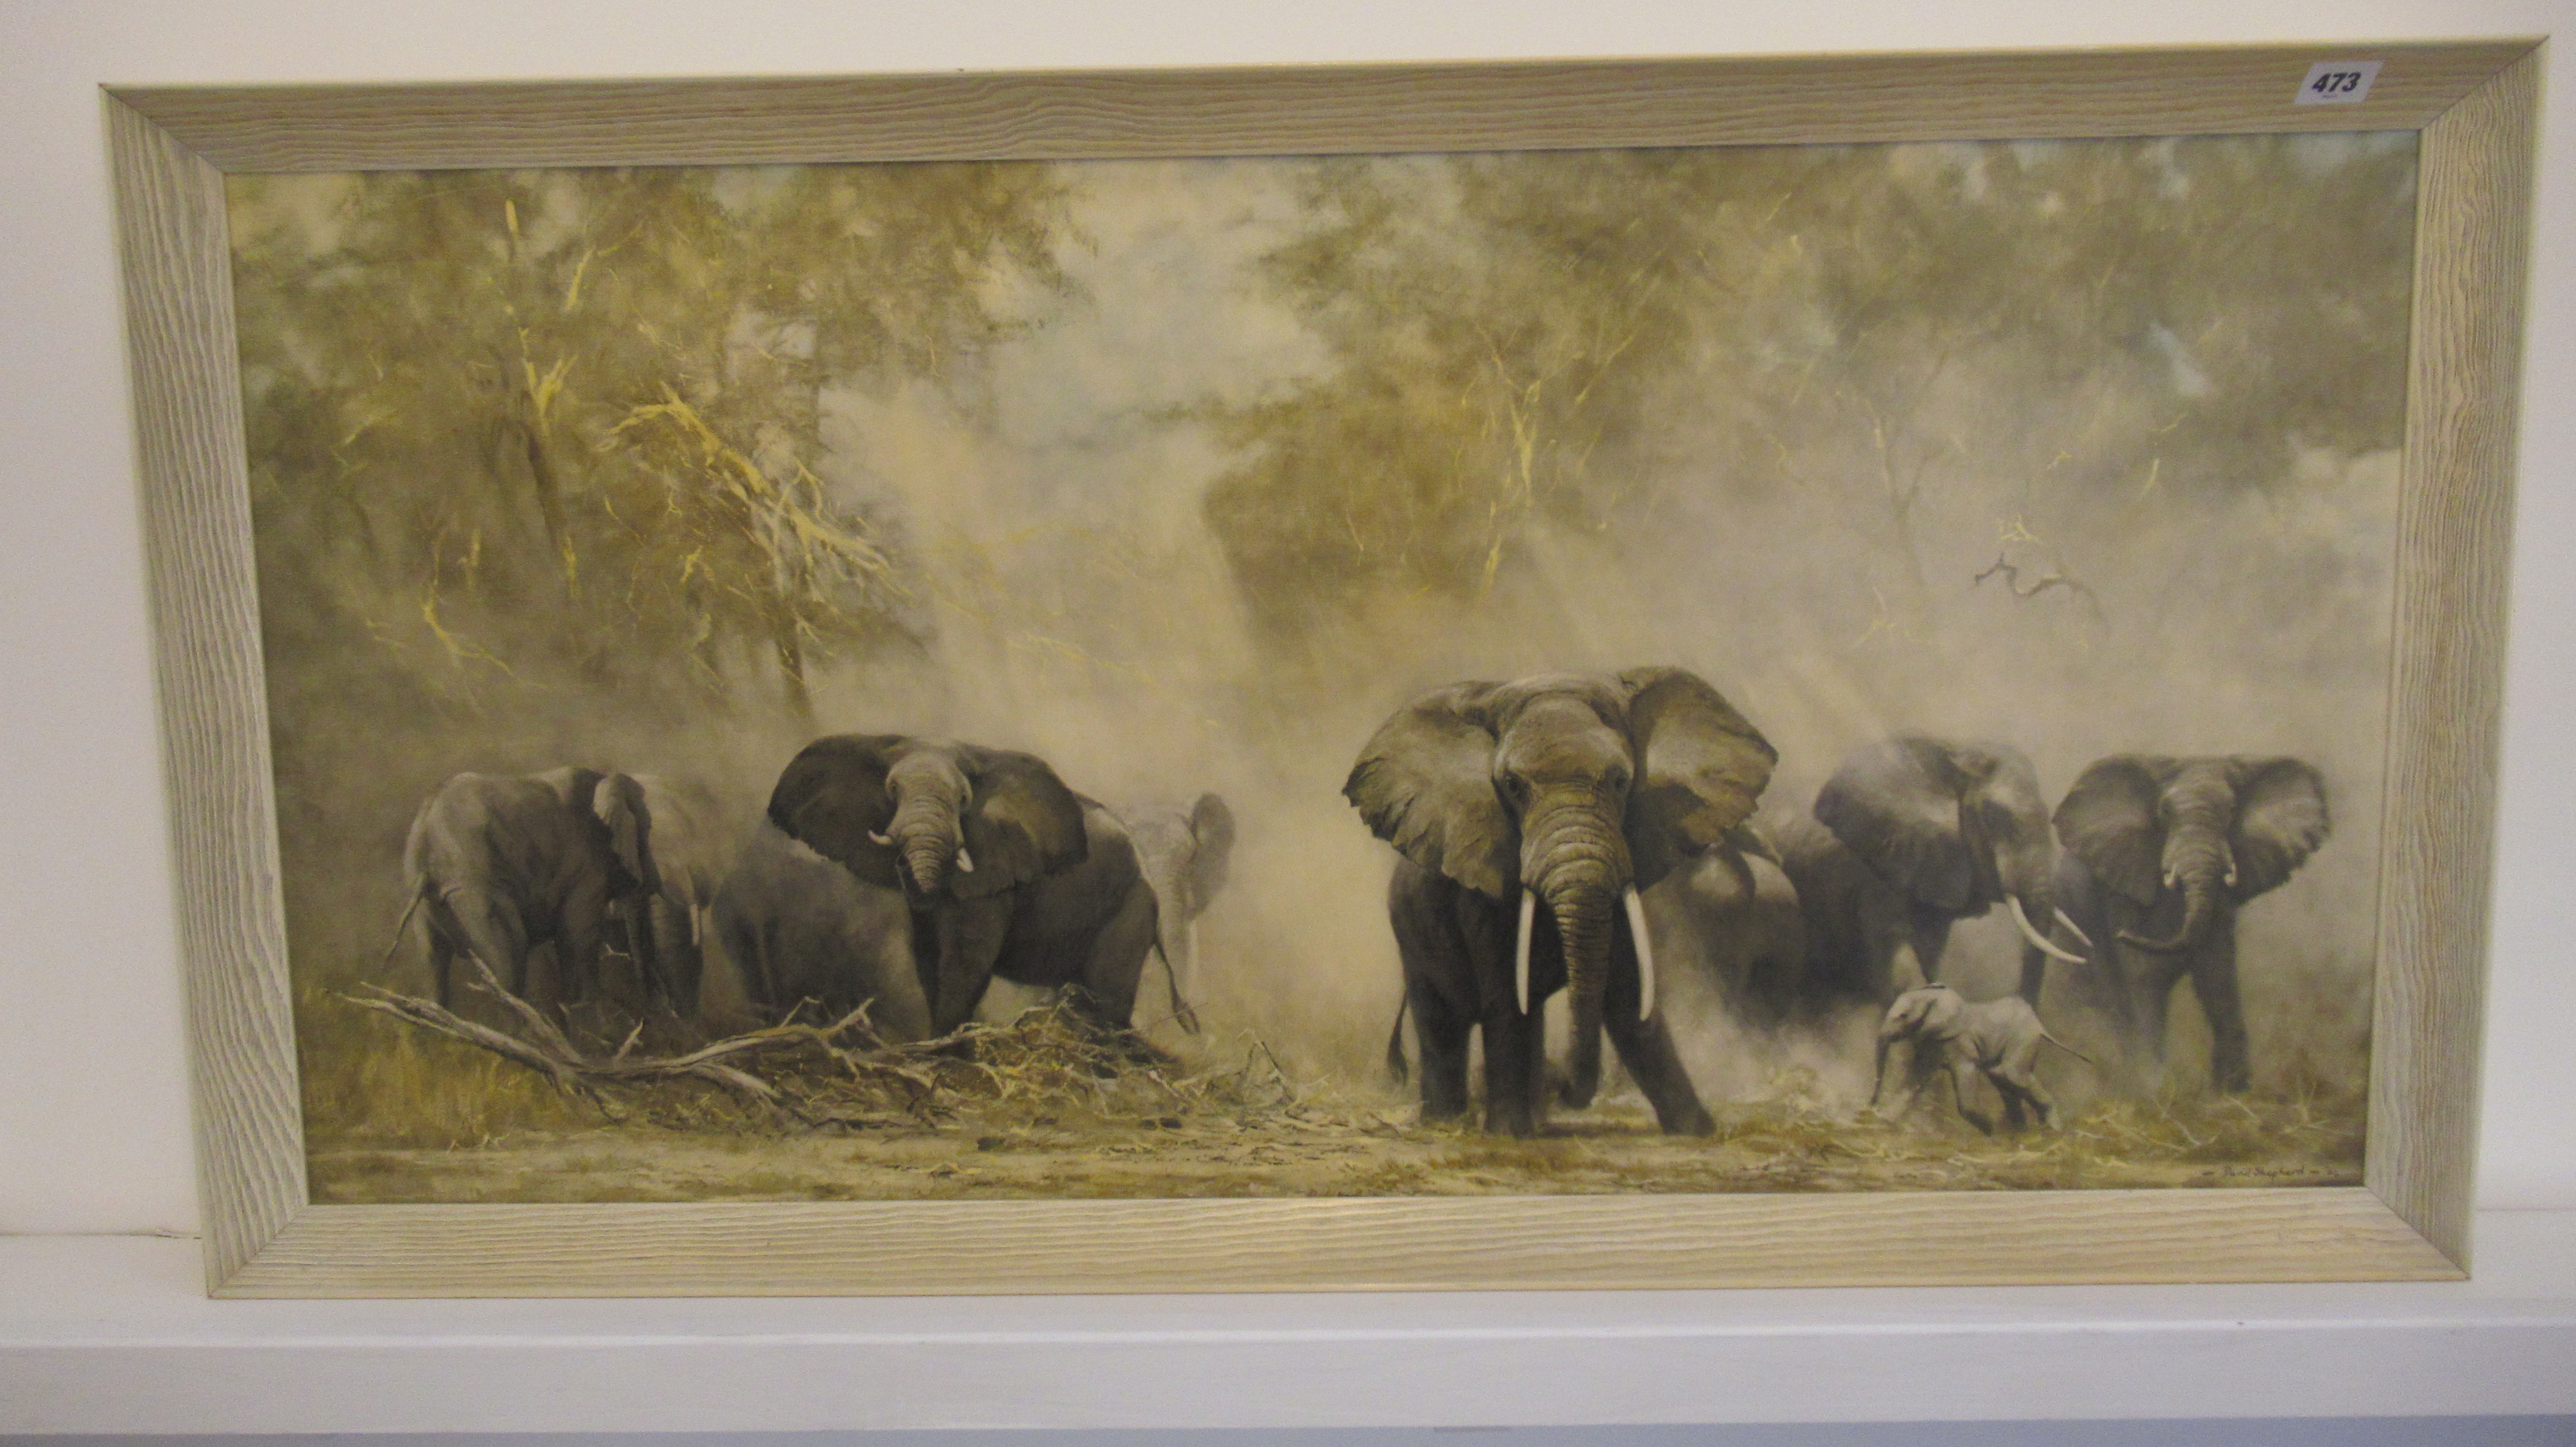 A David Shepherd framed print of elephants - 100cm x 50cm